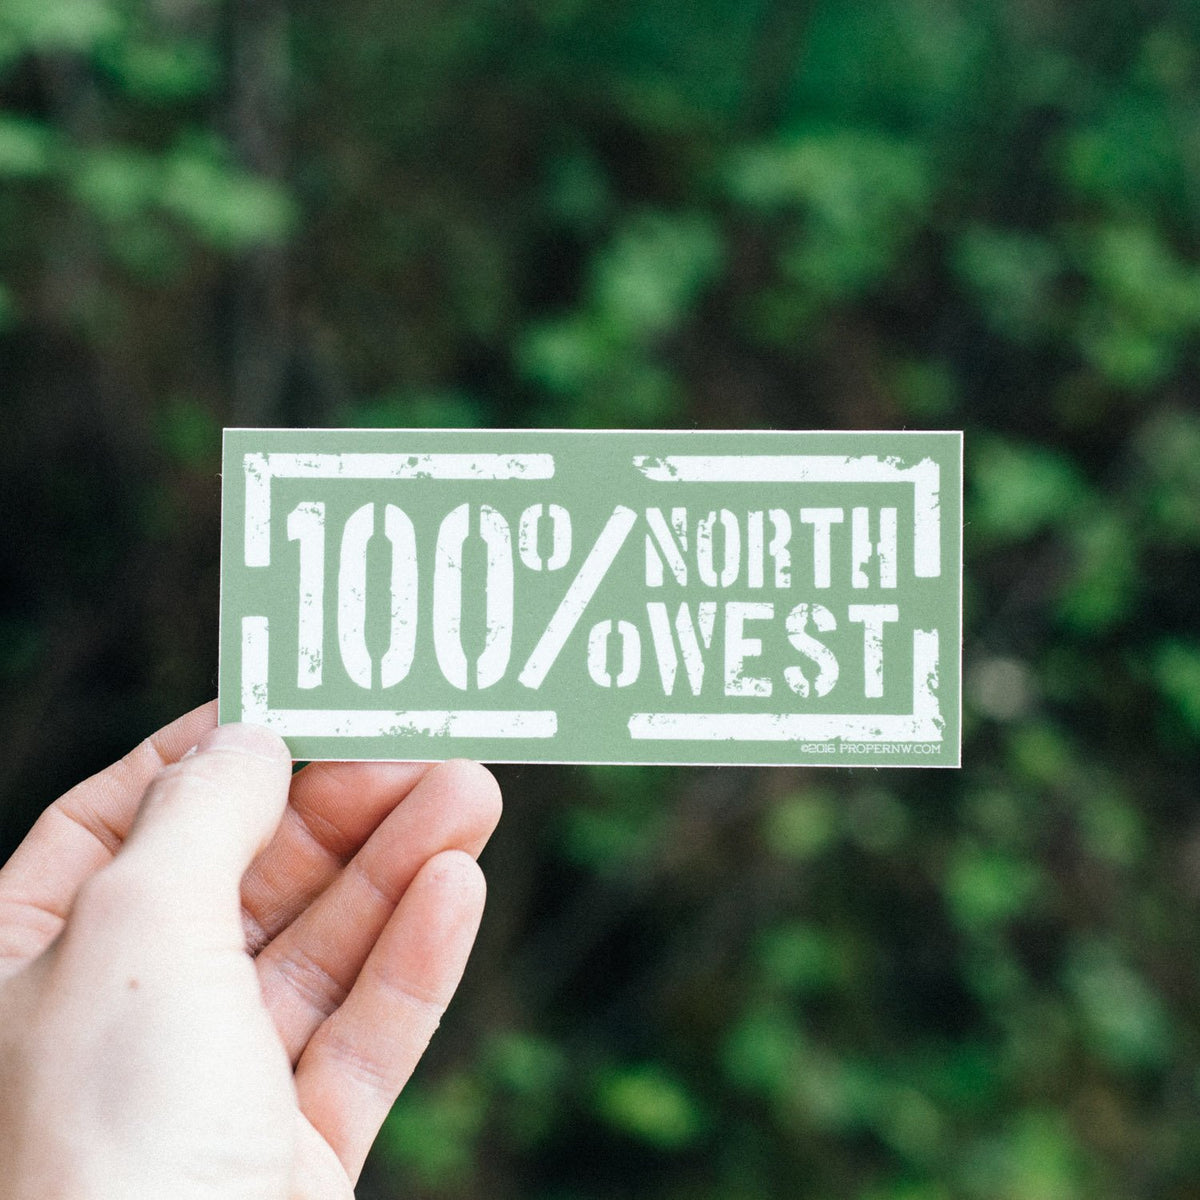 100 Percent North West Sticker